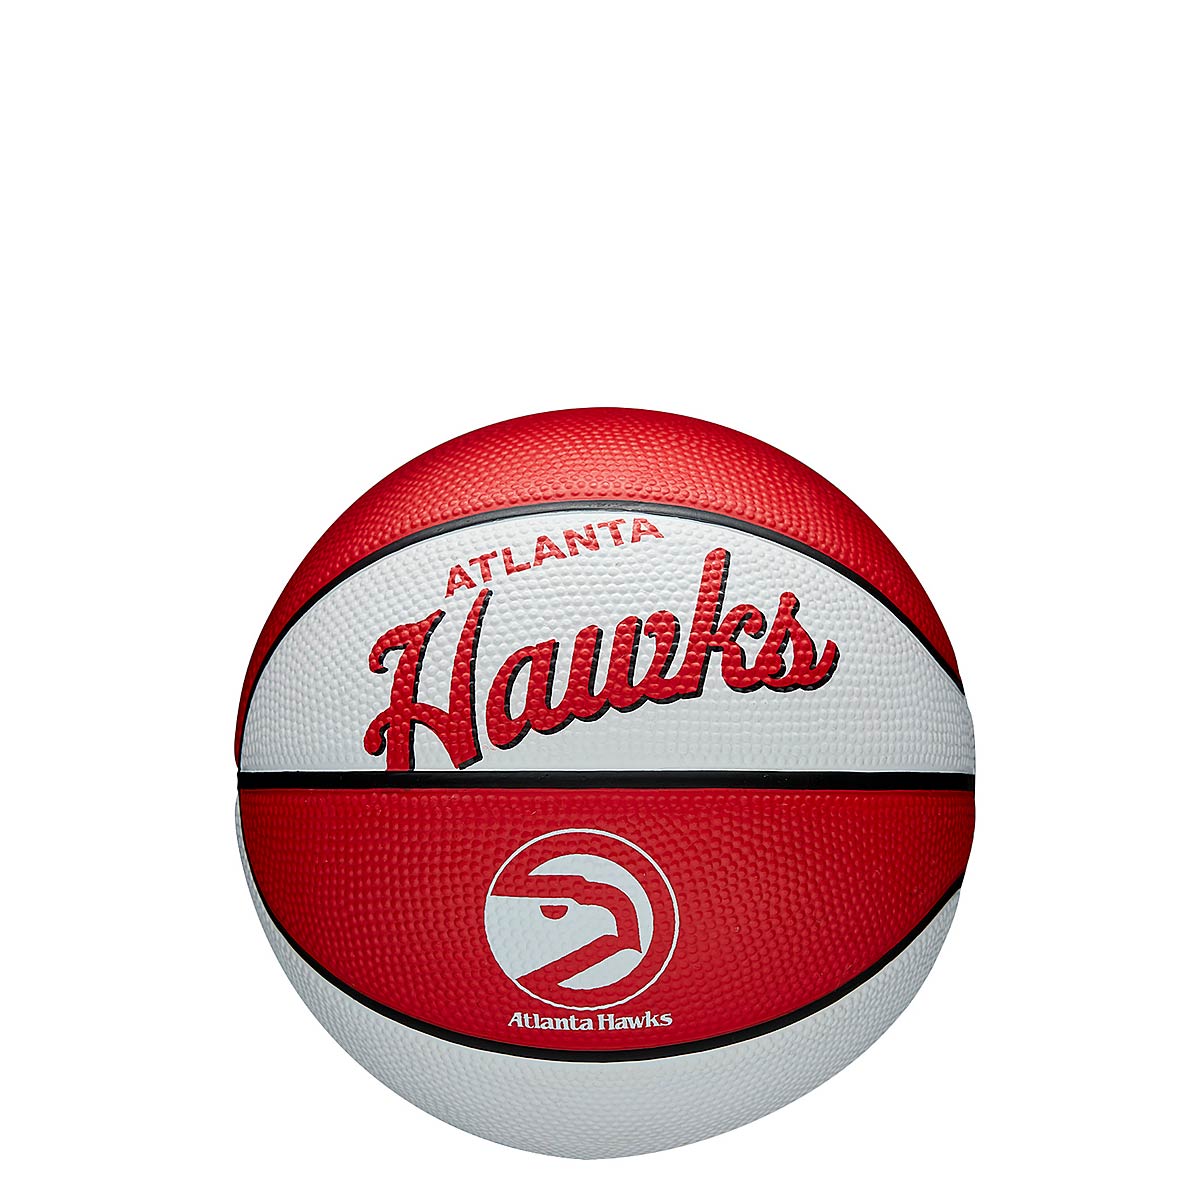 Wilson Nba Atlanta Hawks Retro Basketballmini, Red